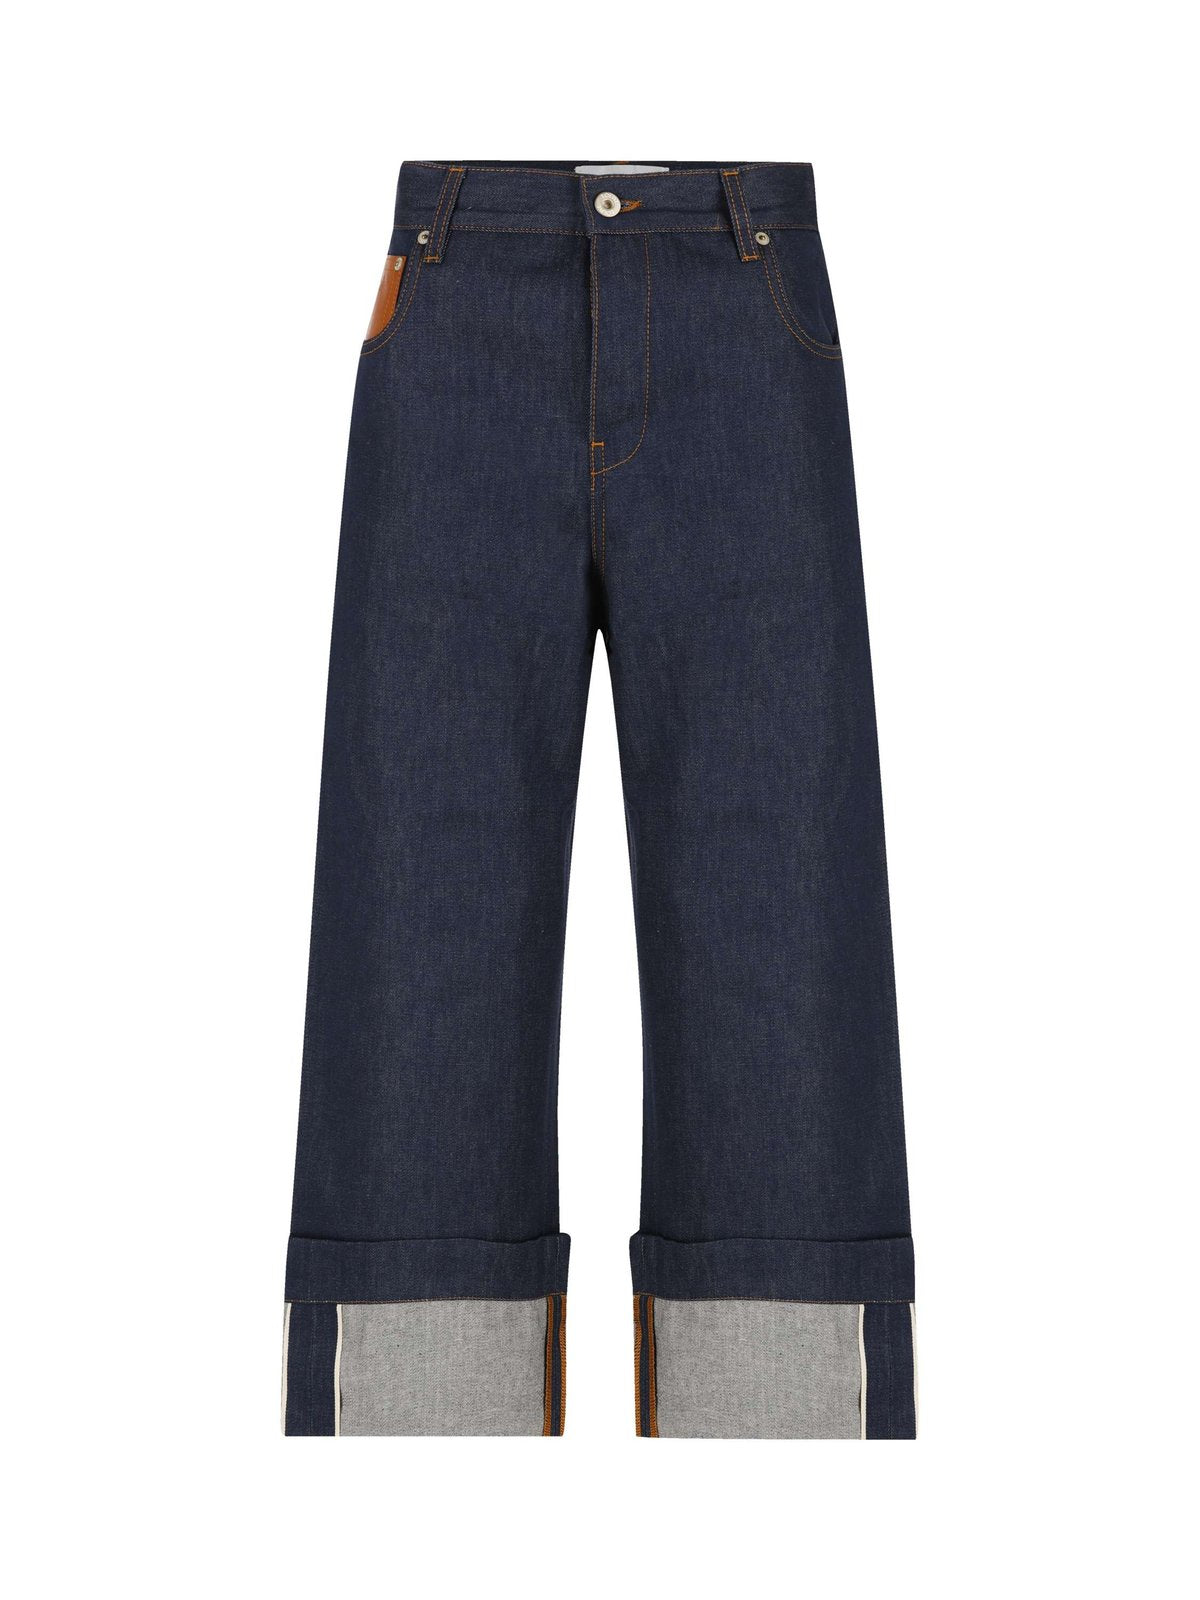 Loewe Fisherman Turn-Up Jeans